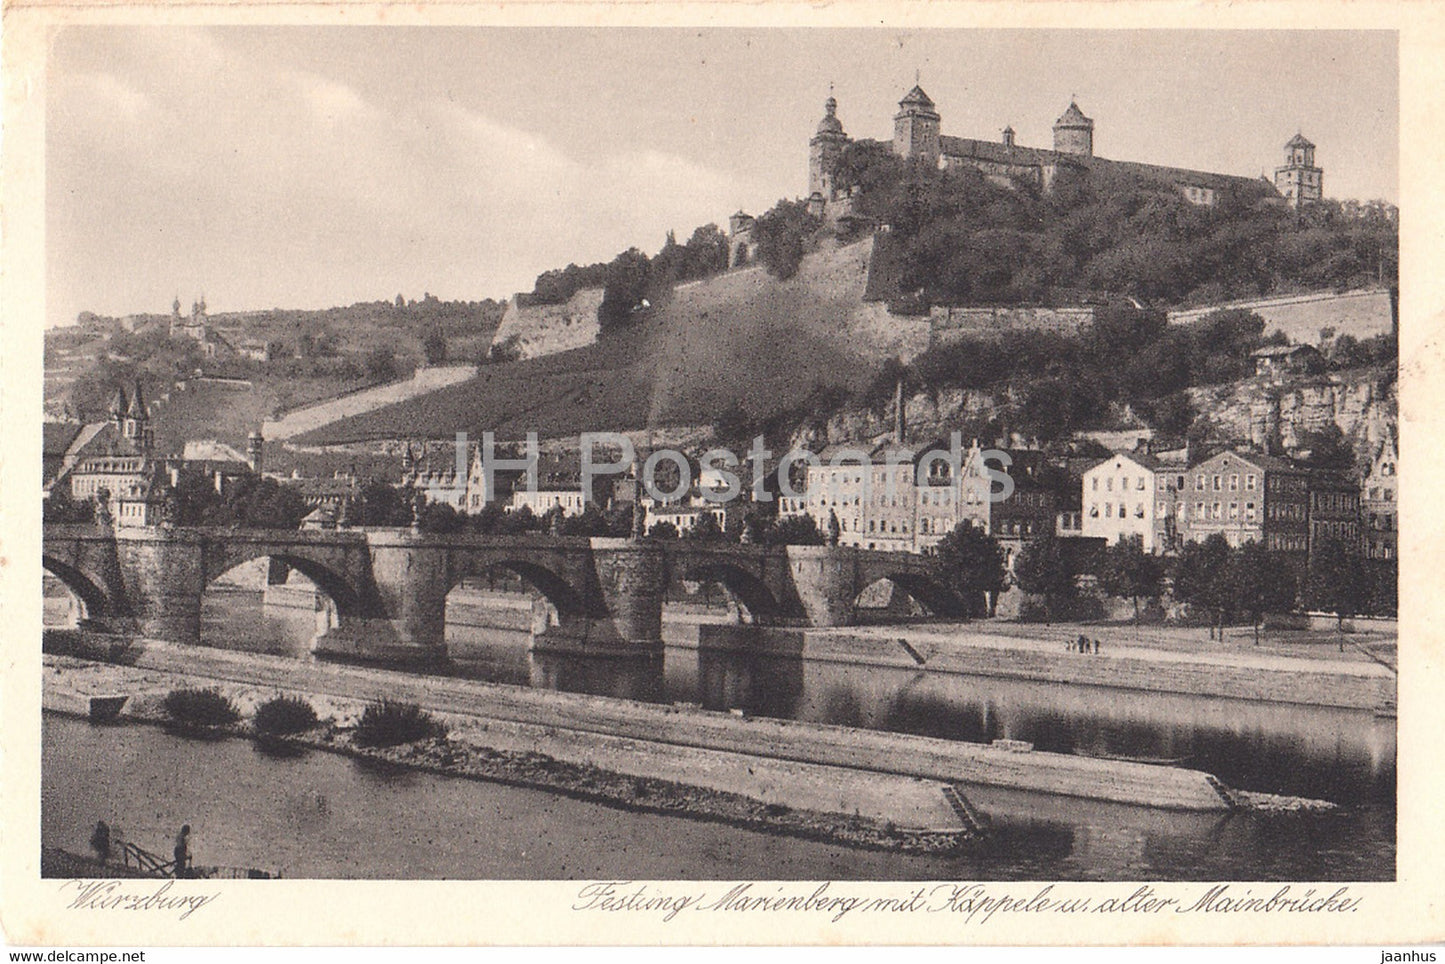 Wurzburg - Festung Marienberg mit Kappele u alter Mainbrucke - 68520 - old postcard - Germany - unused - JH Postcards